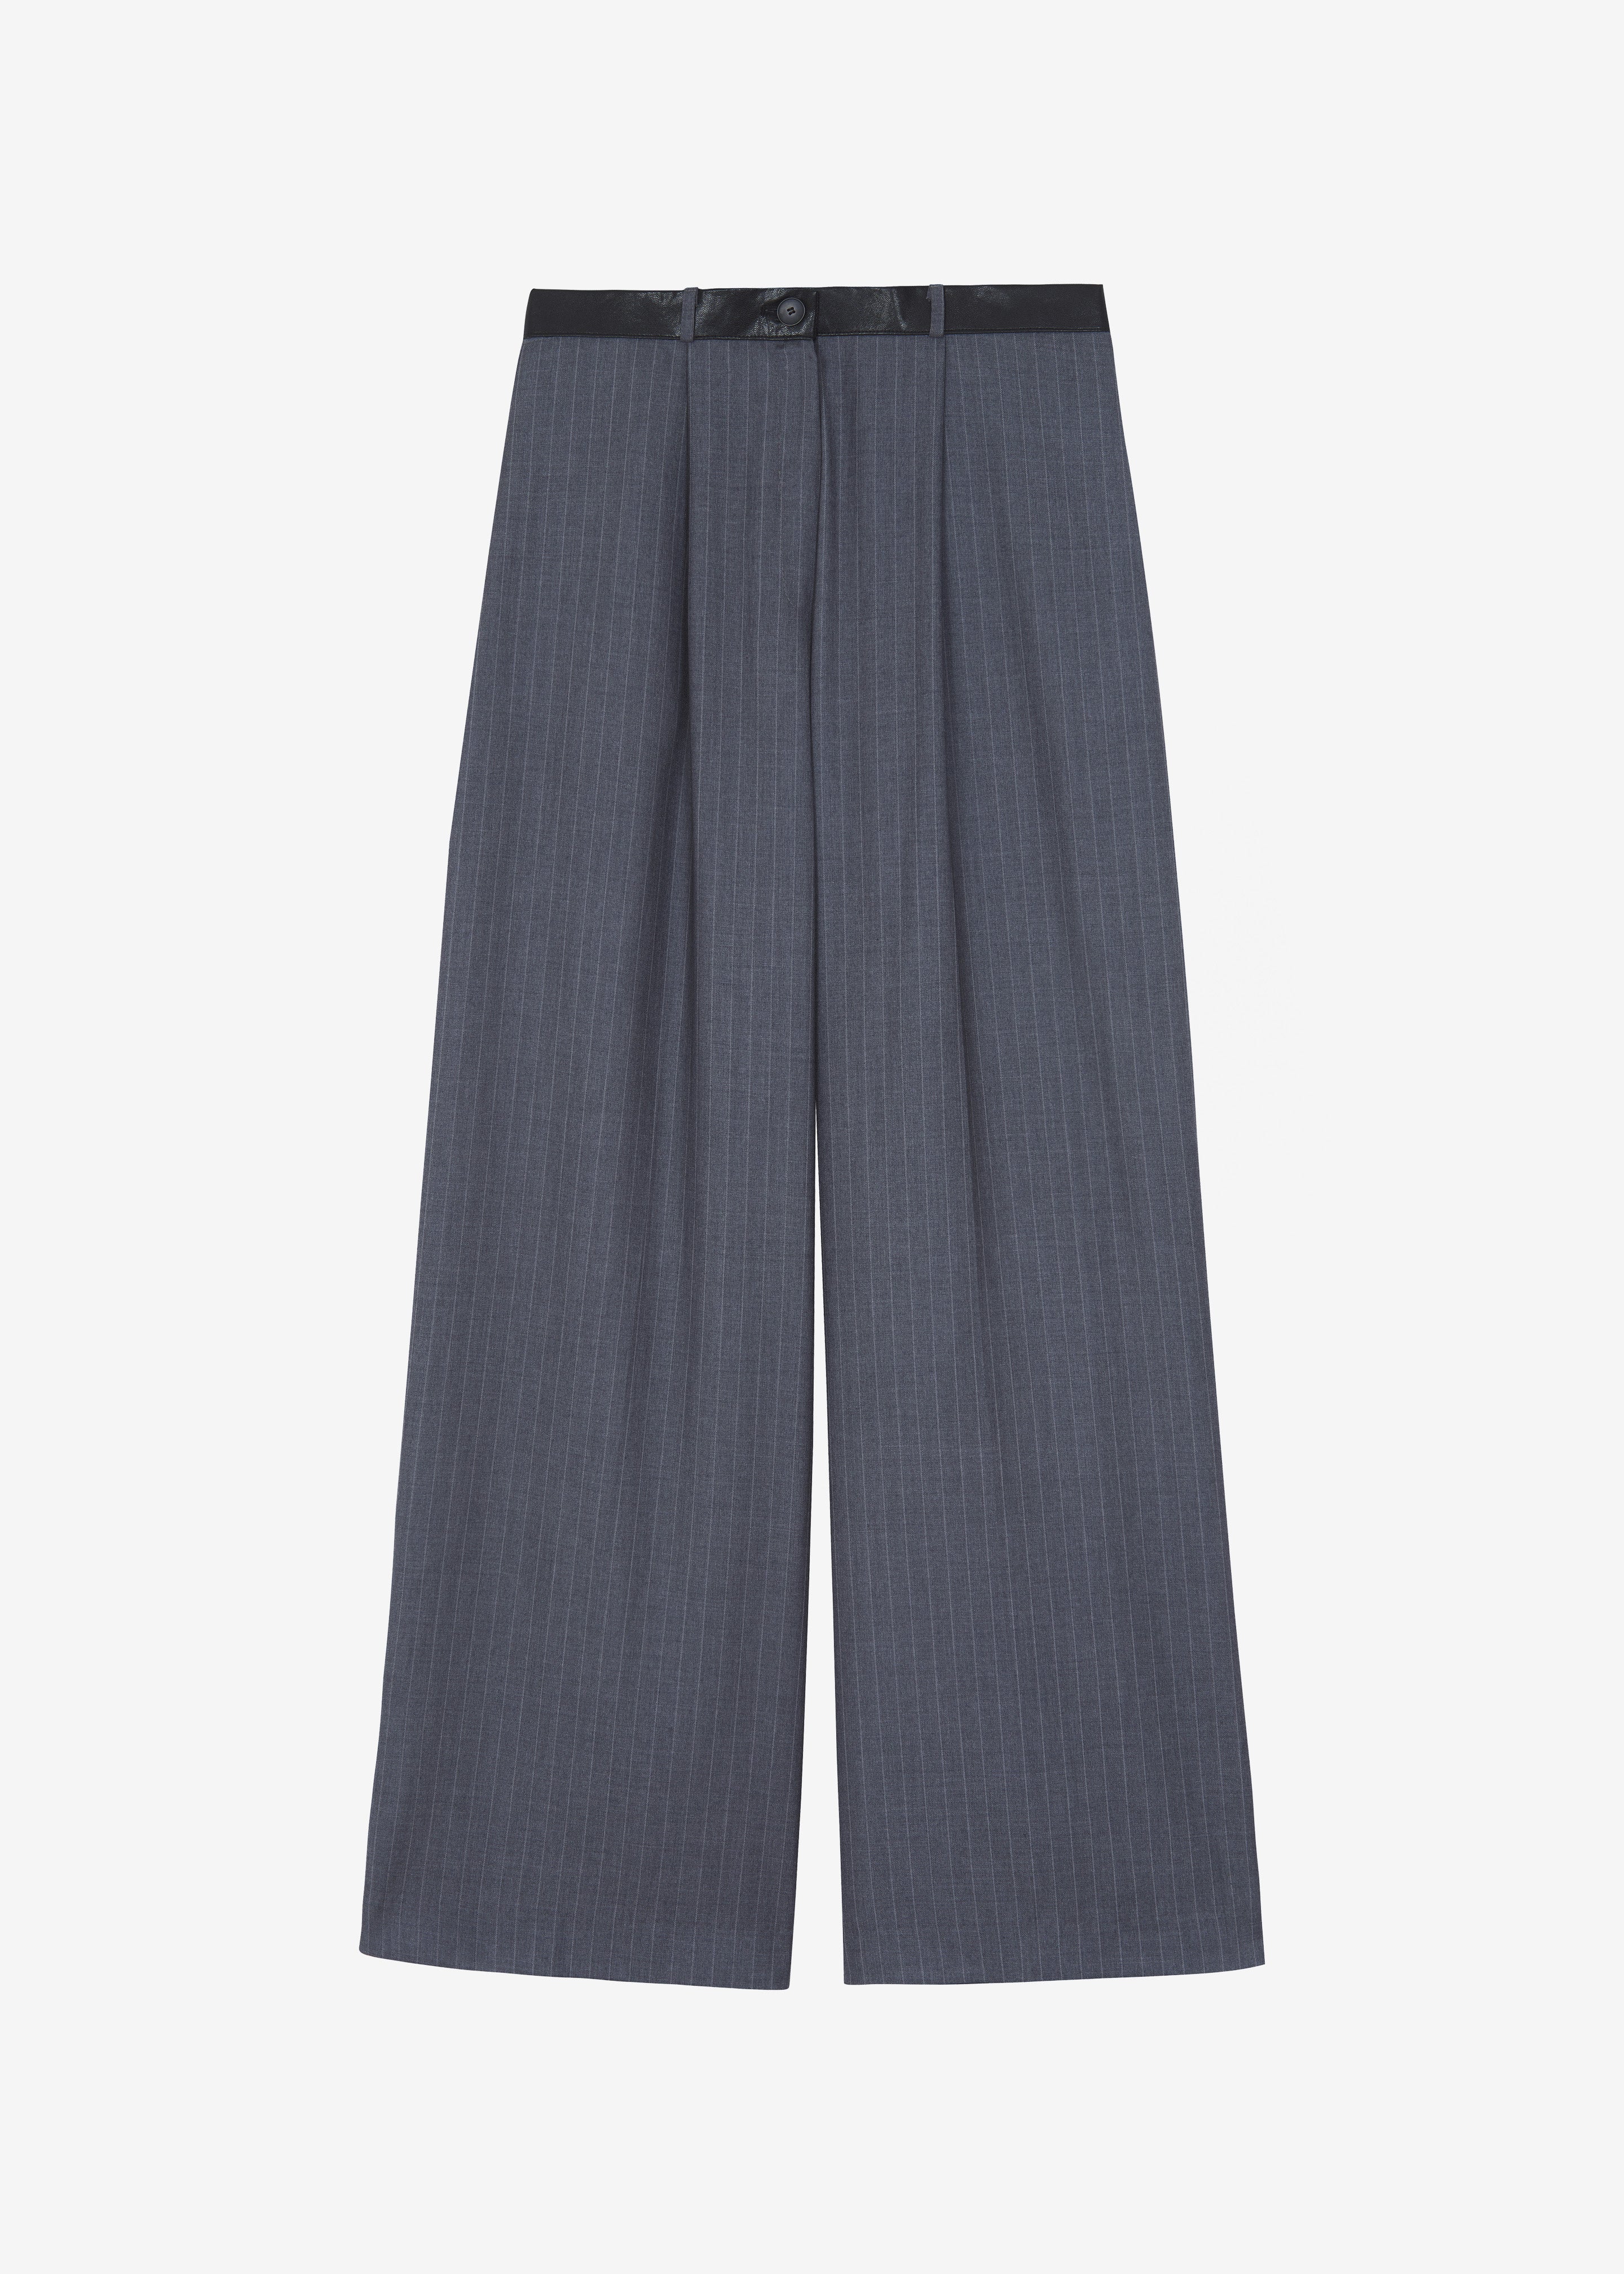 Kerry Trousers - Grey Pinstripe - 8